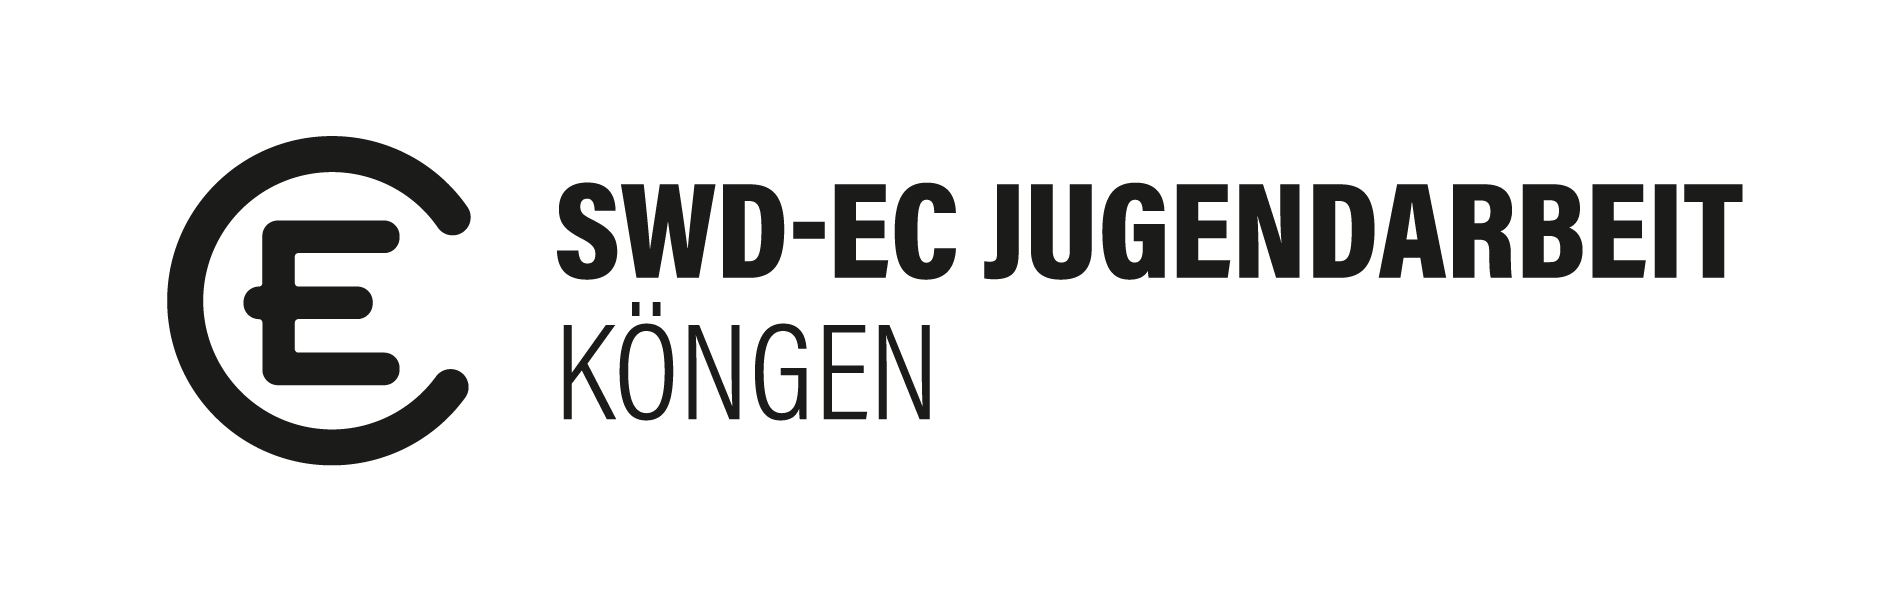 EC Köngen